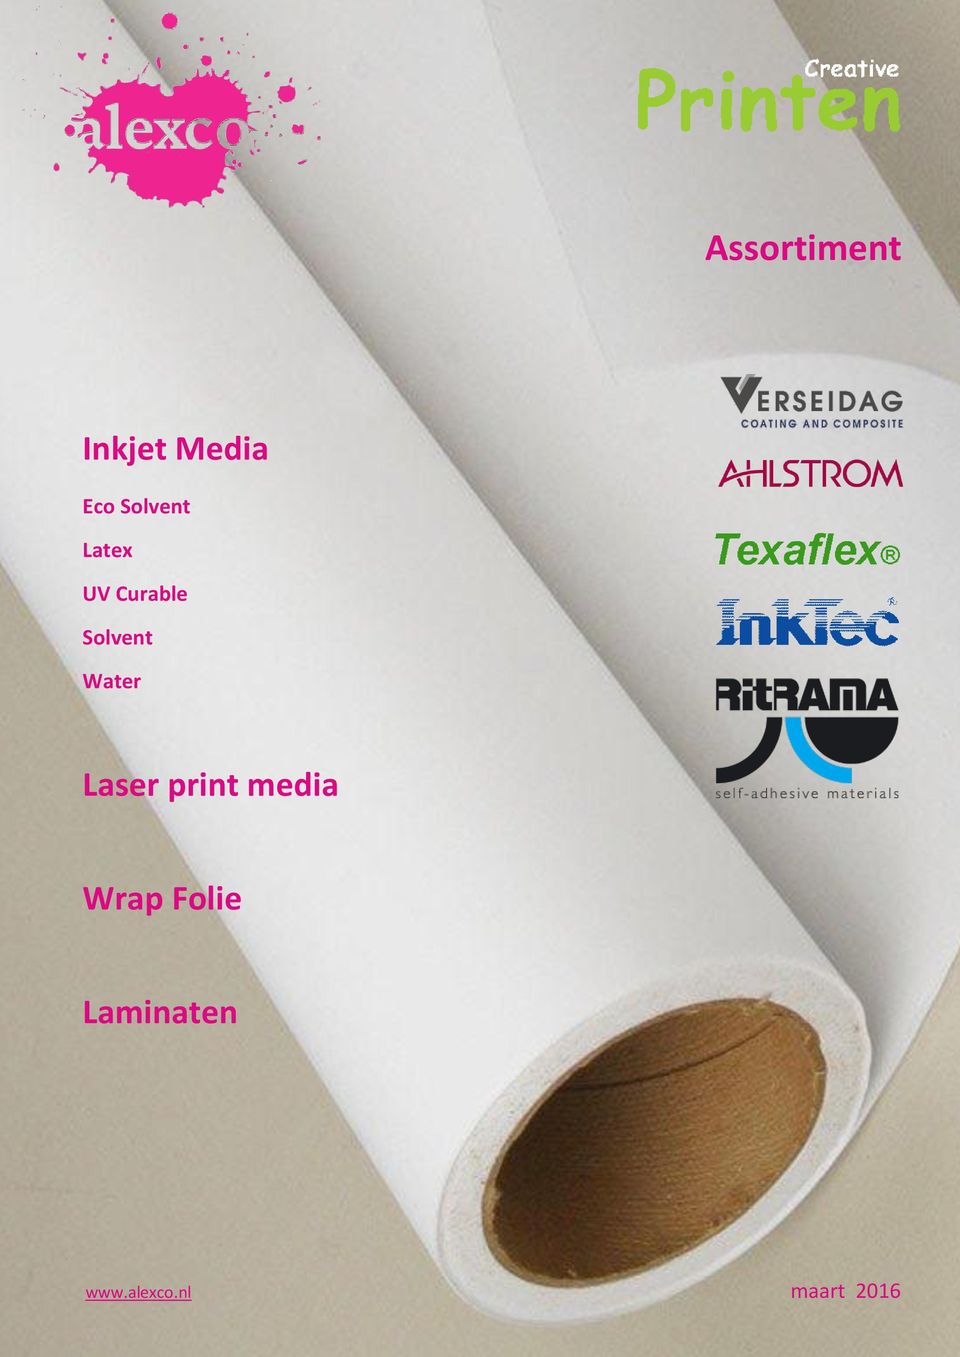 Water Laser print media Wrap